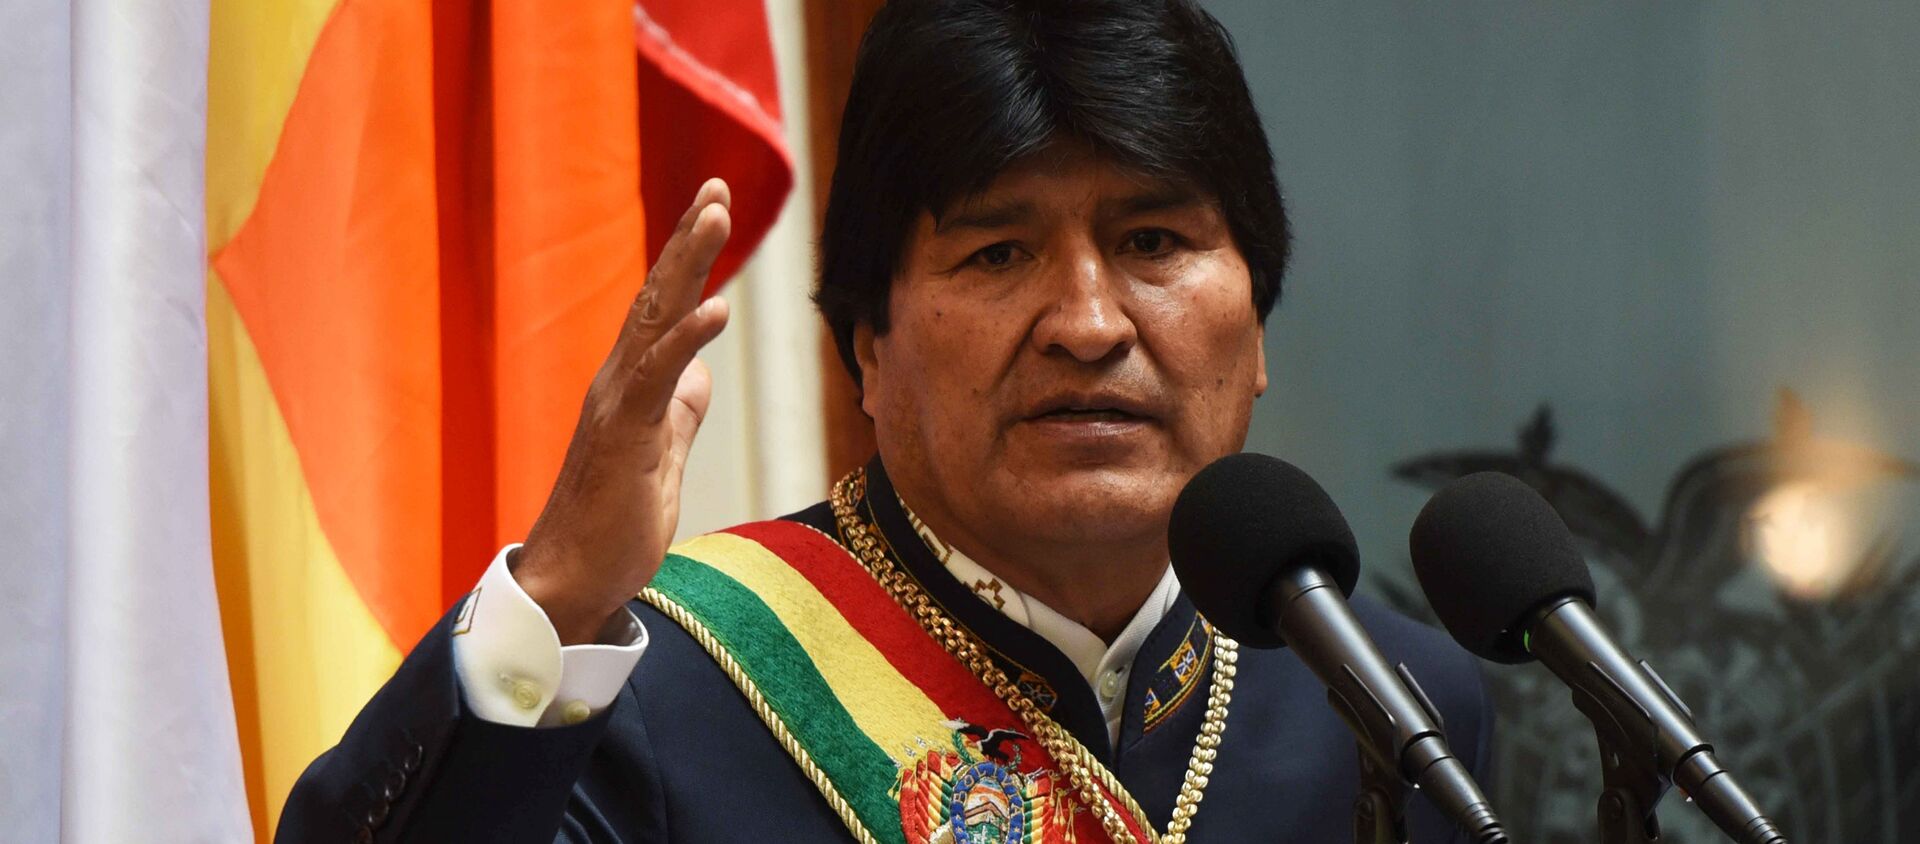 Evo Morales, presidente de Bolivia - Sputnik Mundo, 1920, 02.04.2018